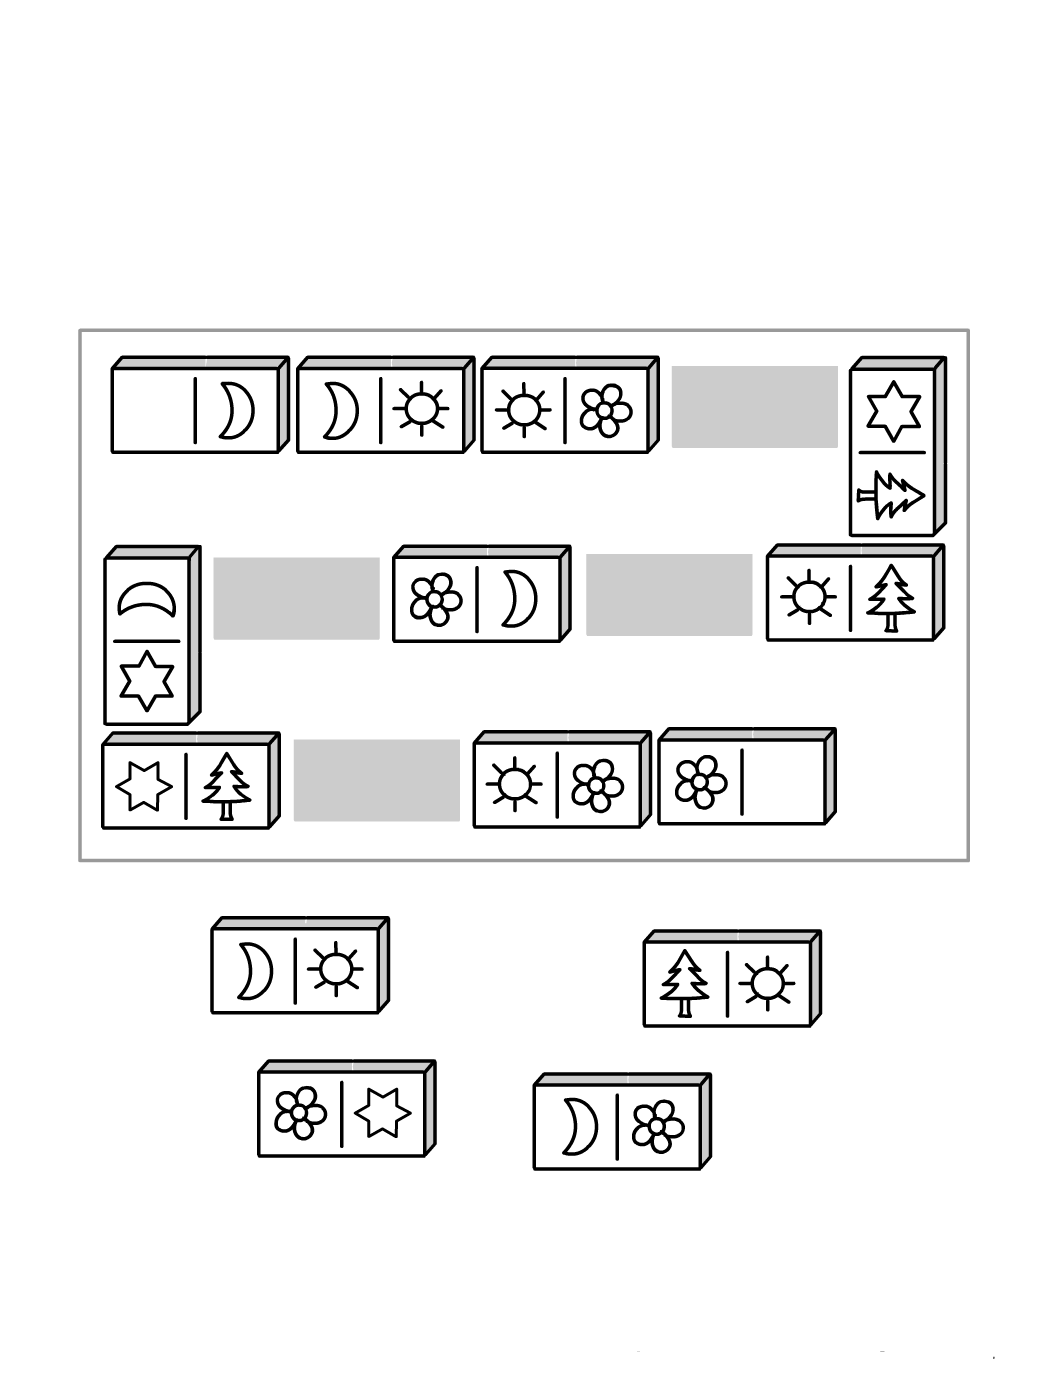 domino - dominoes1.png